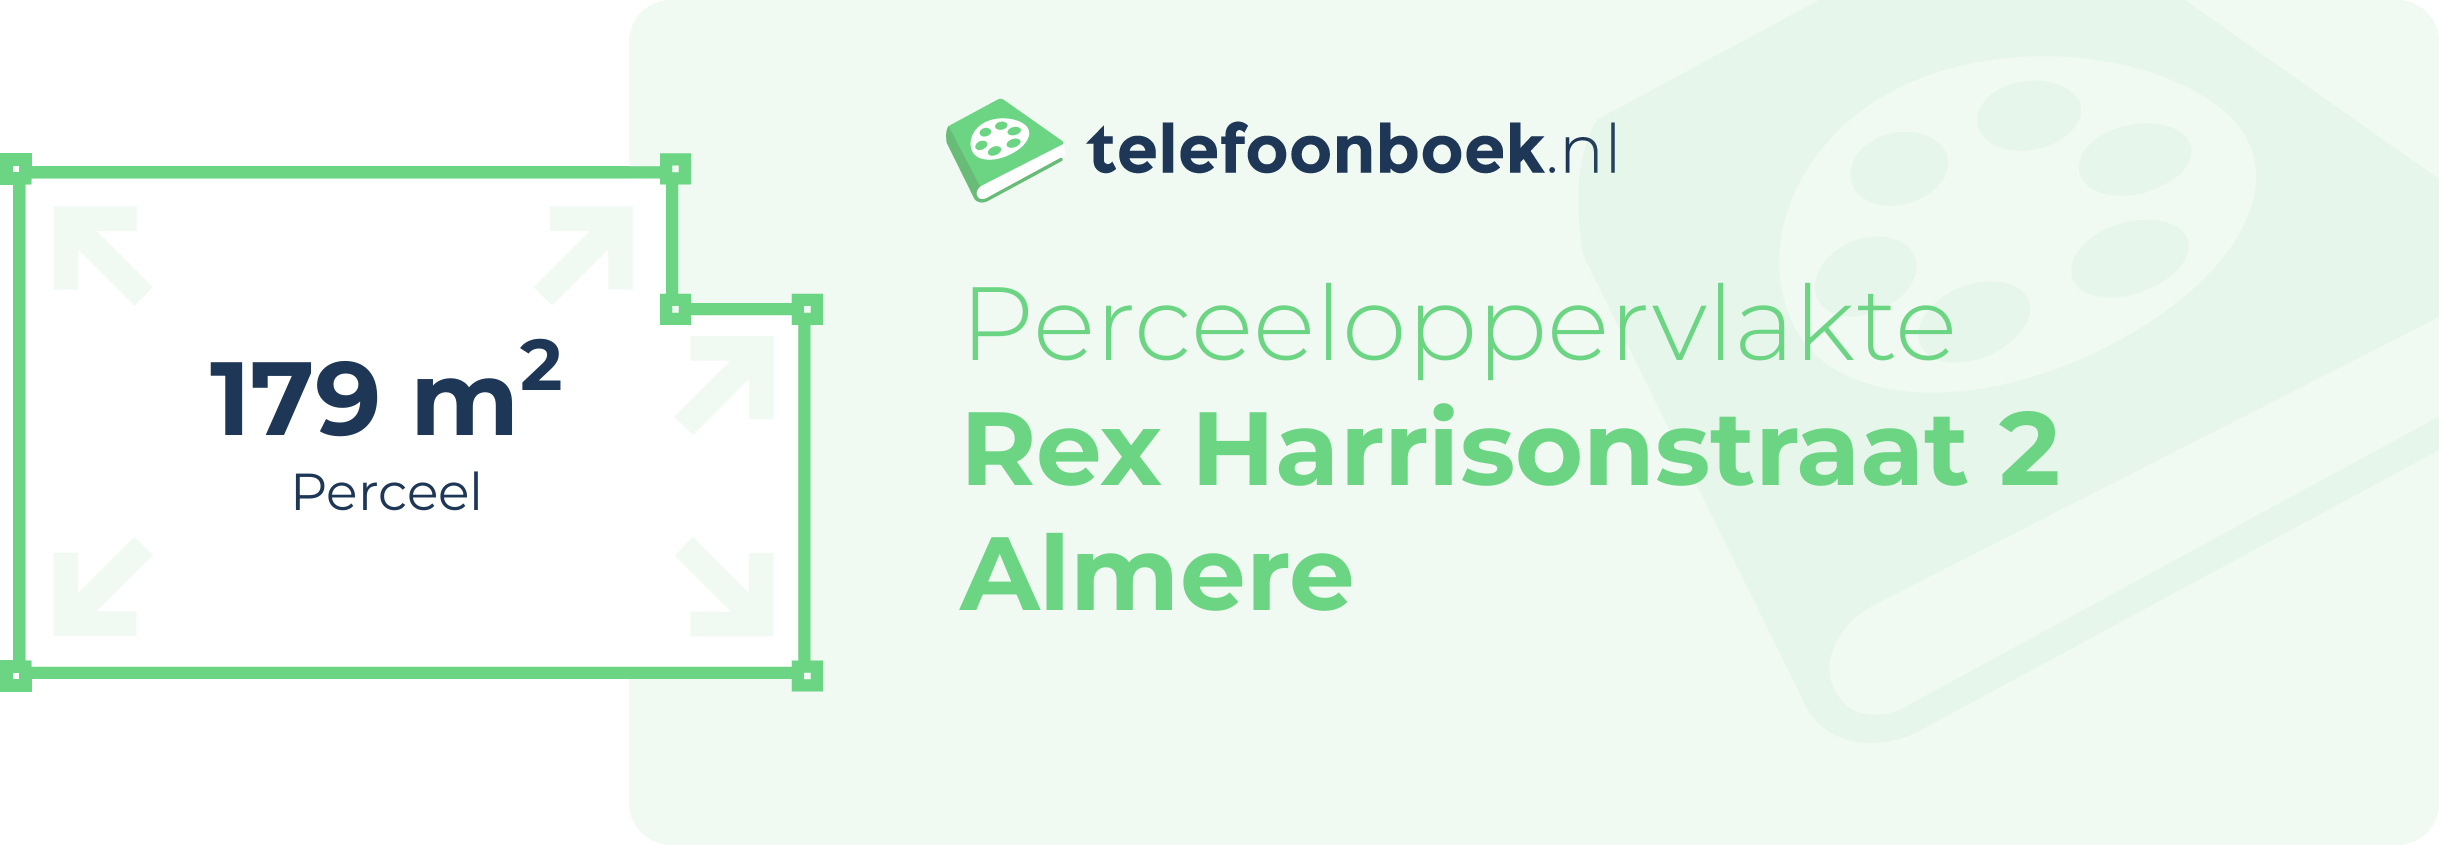 Perceeloppervlakte Rex Harrisonstraat 2 Almere